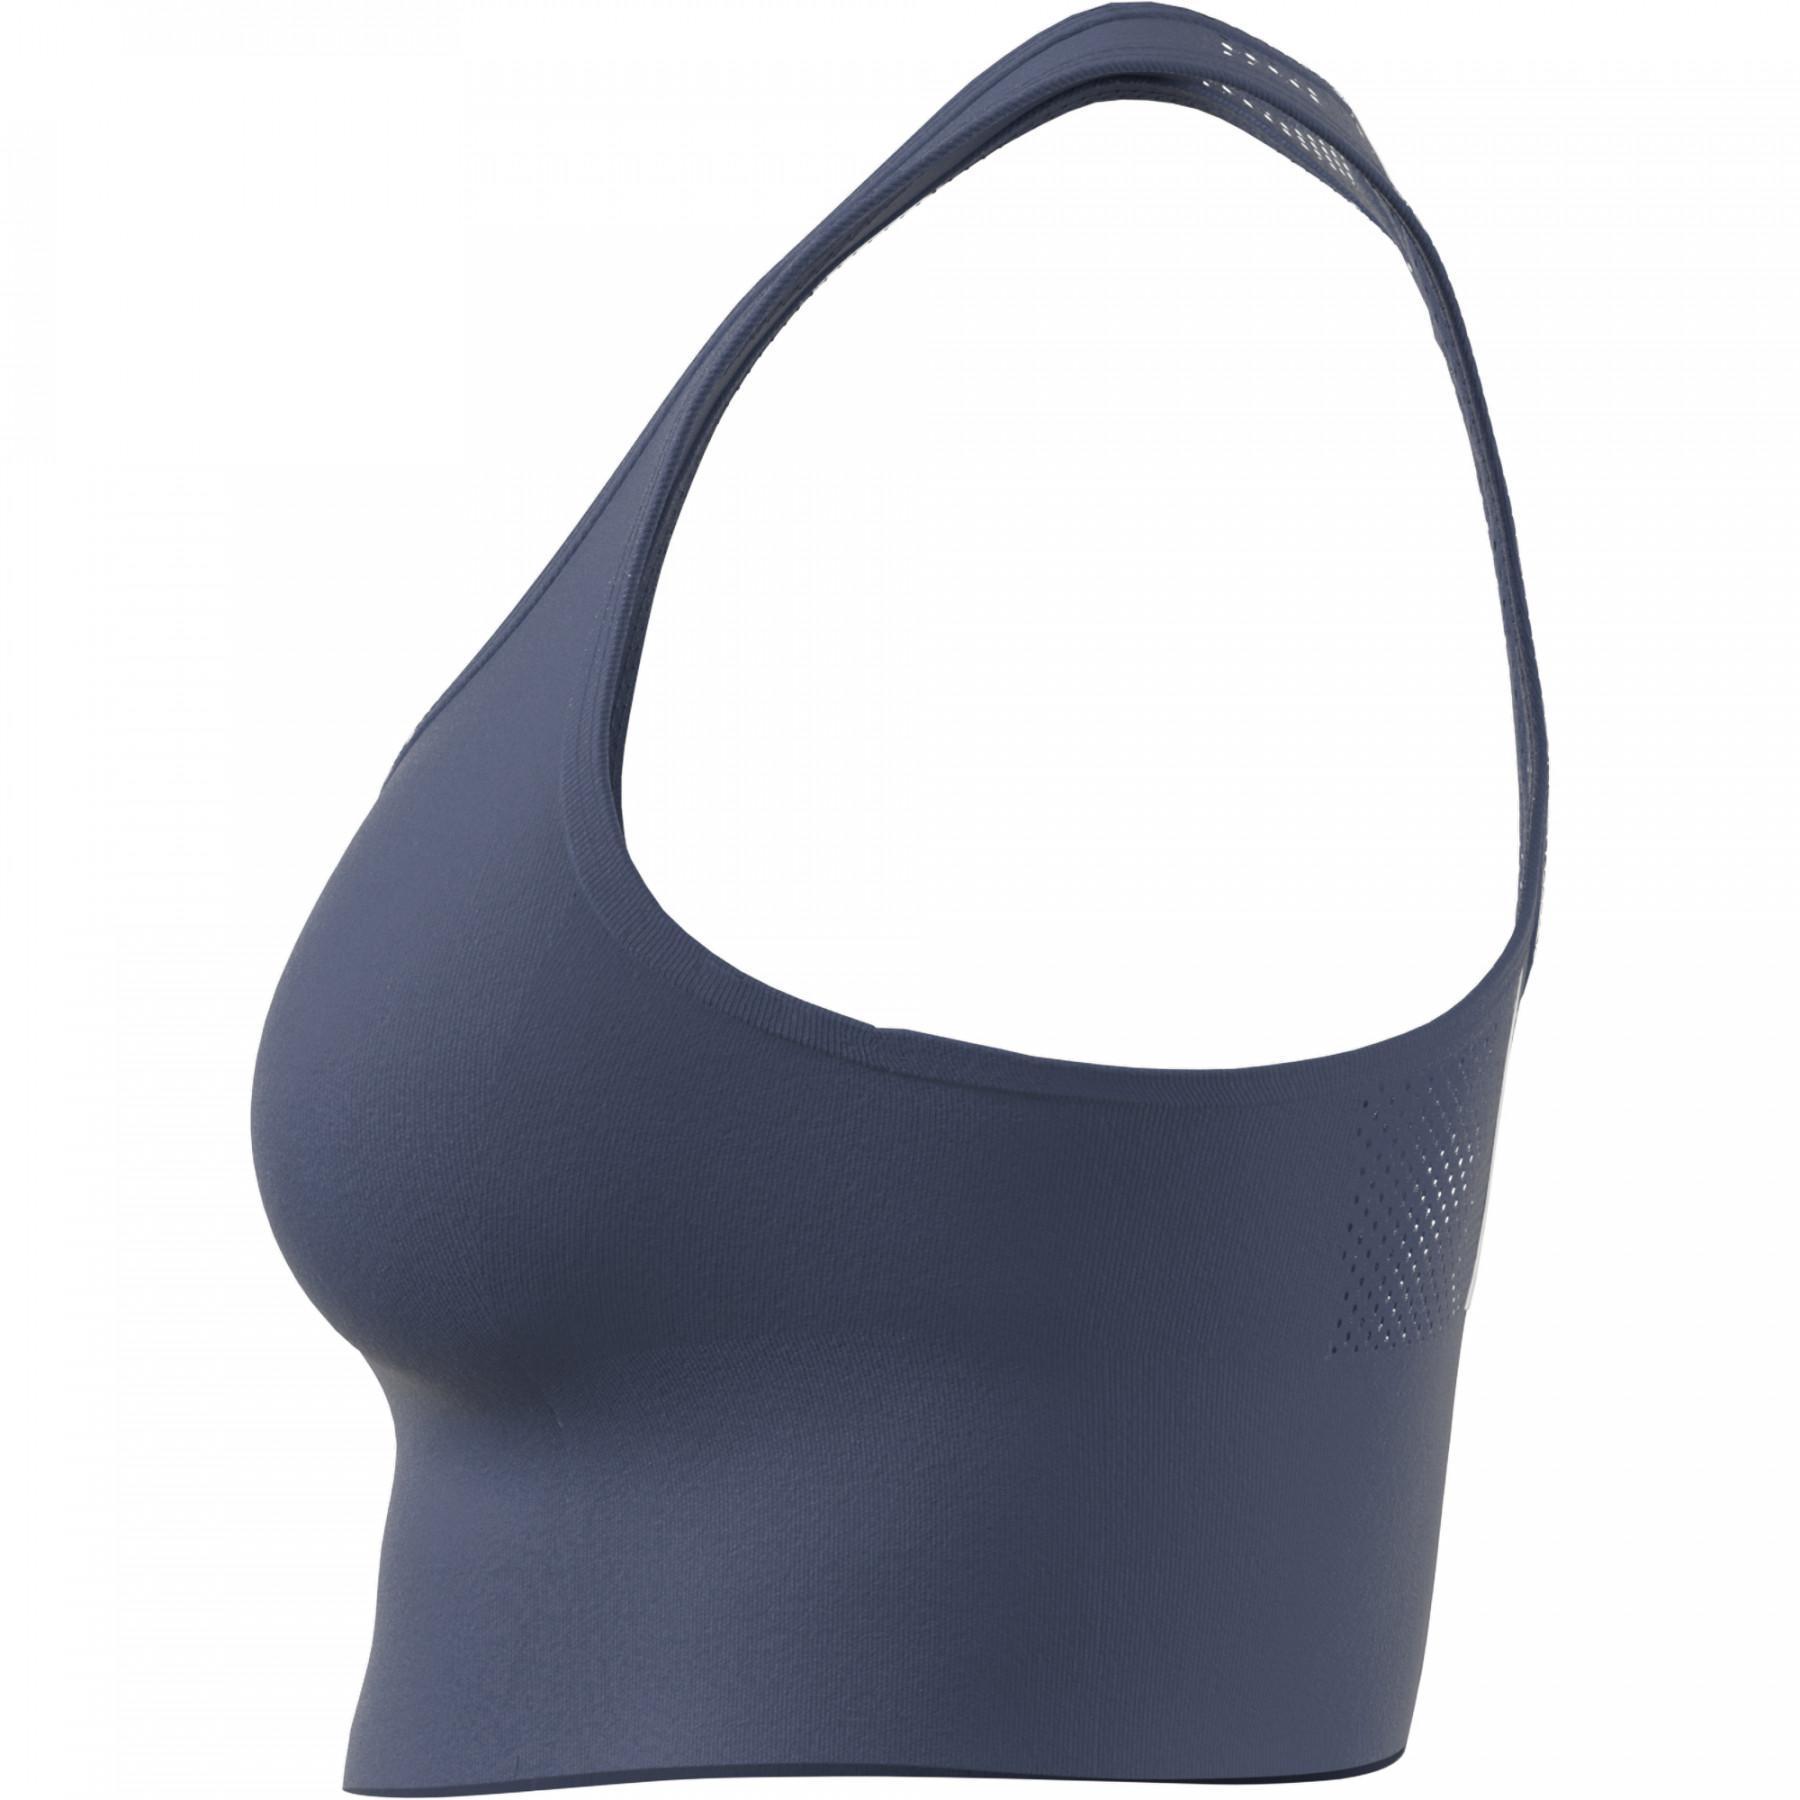 Women's bra adidas Aeroready Designed 2 Move 3-Bandes Sports